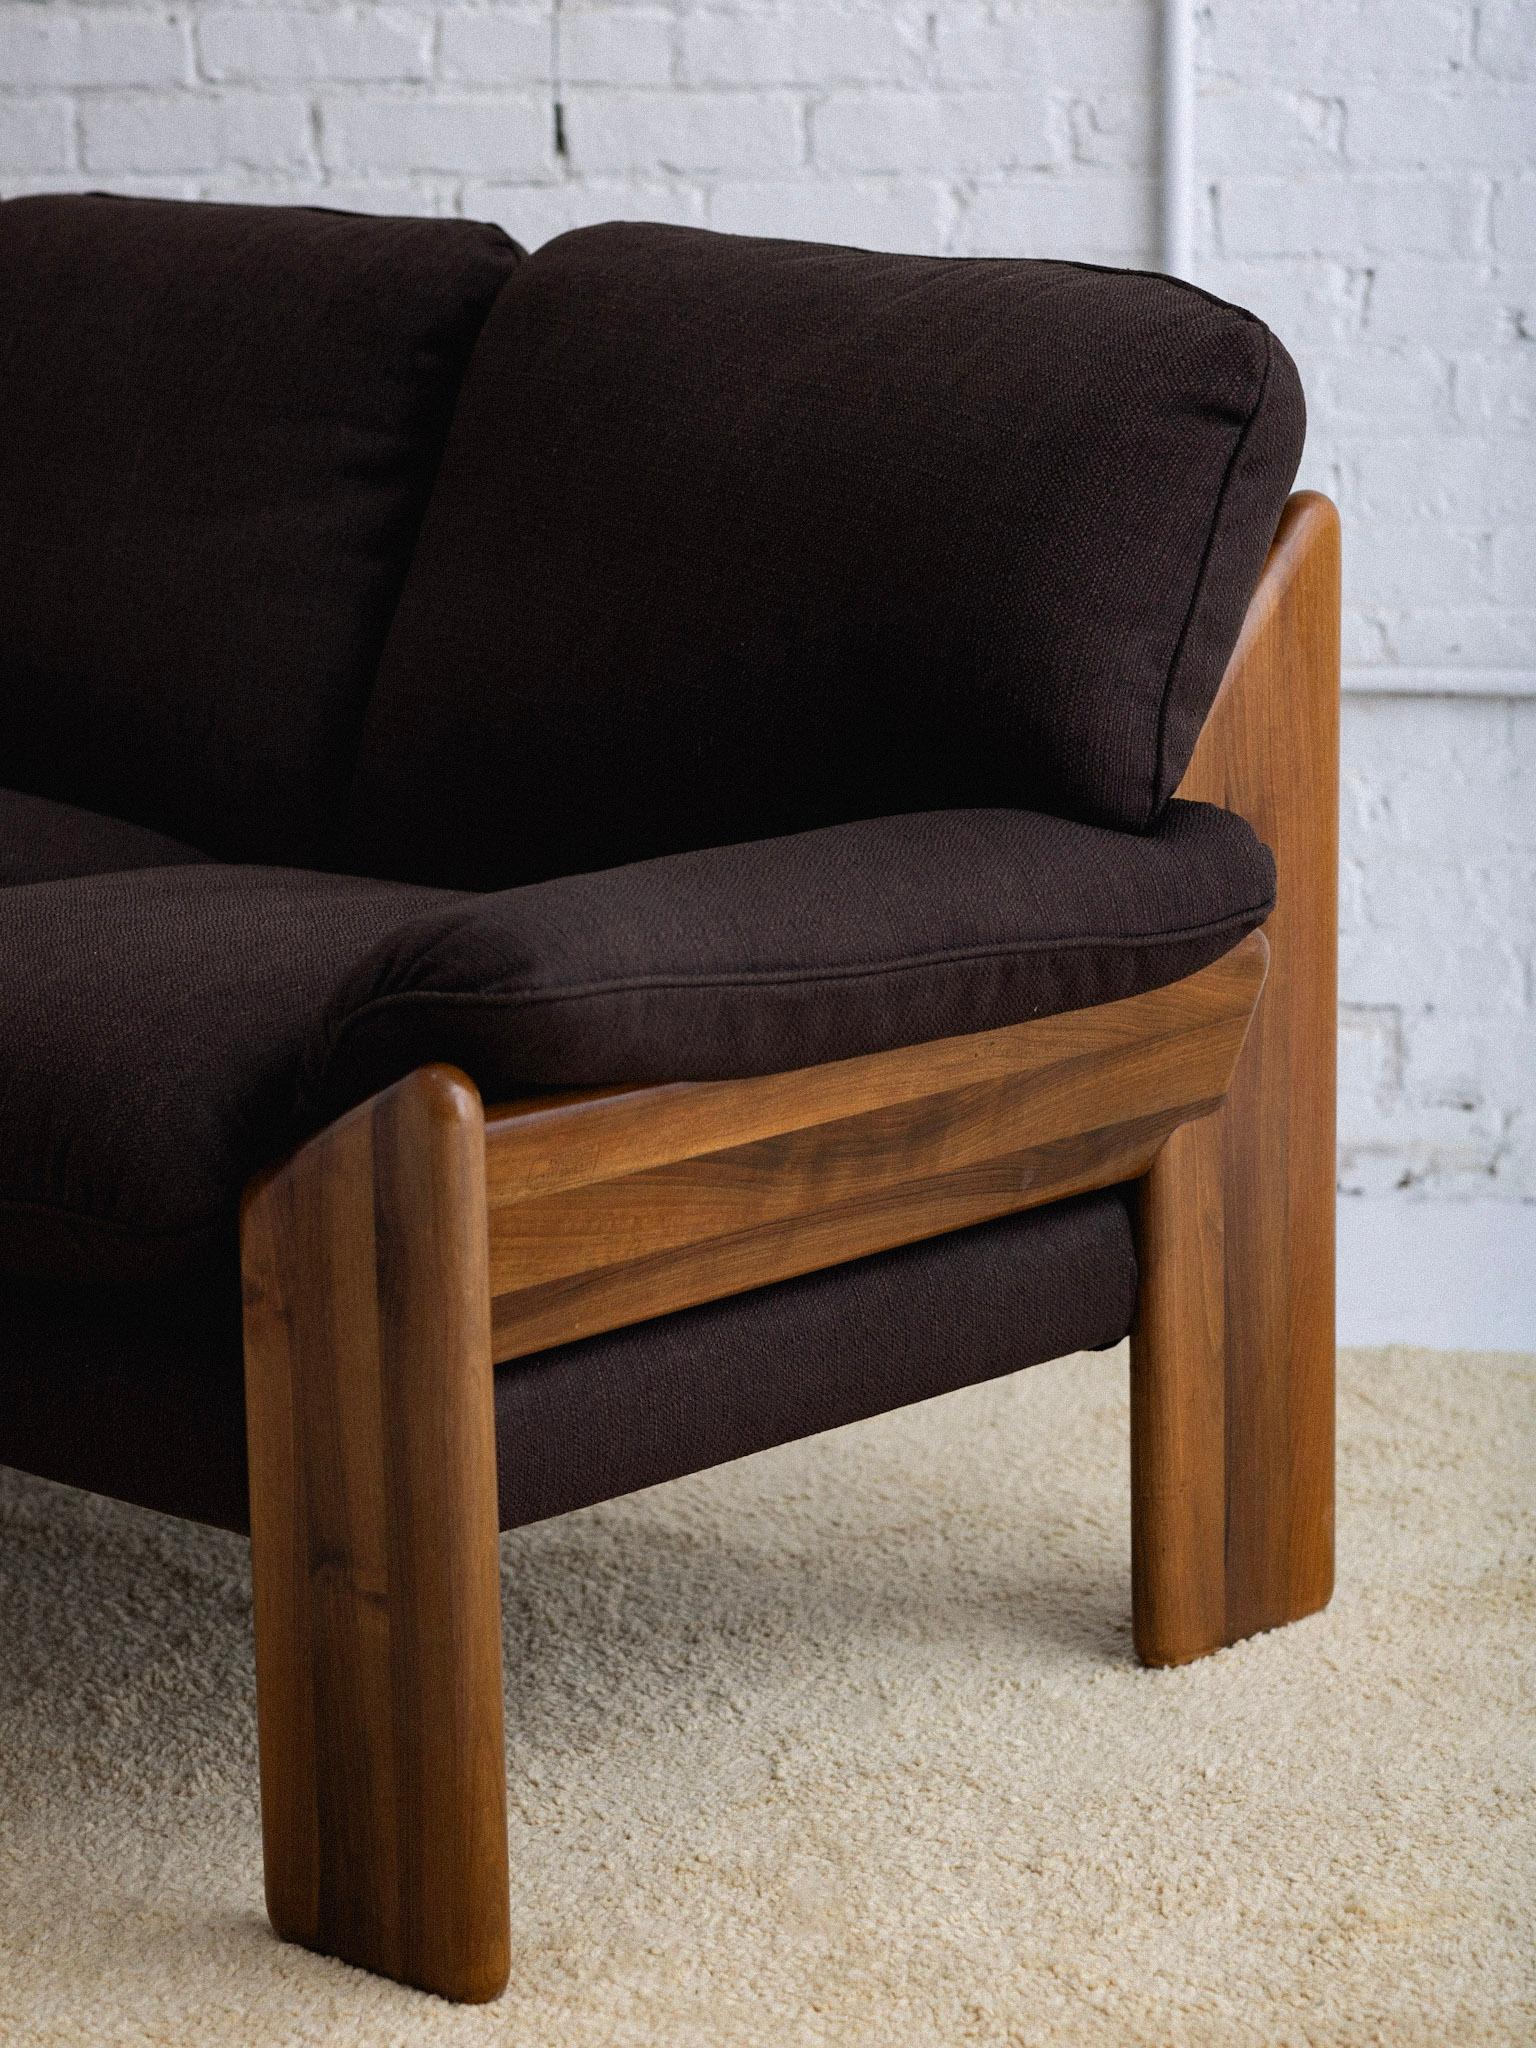 'Sapporo' Wood Frame 3 Seat Sofa by Mario Marenco for Mobil Girgi 2